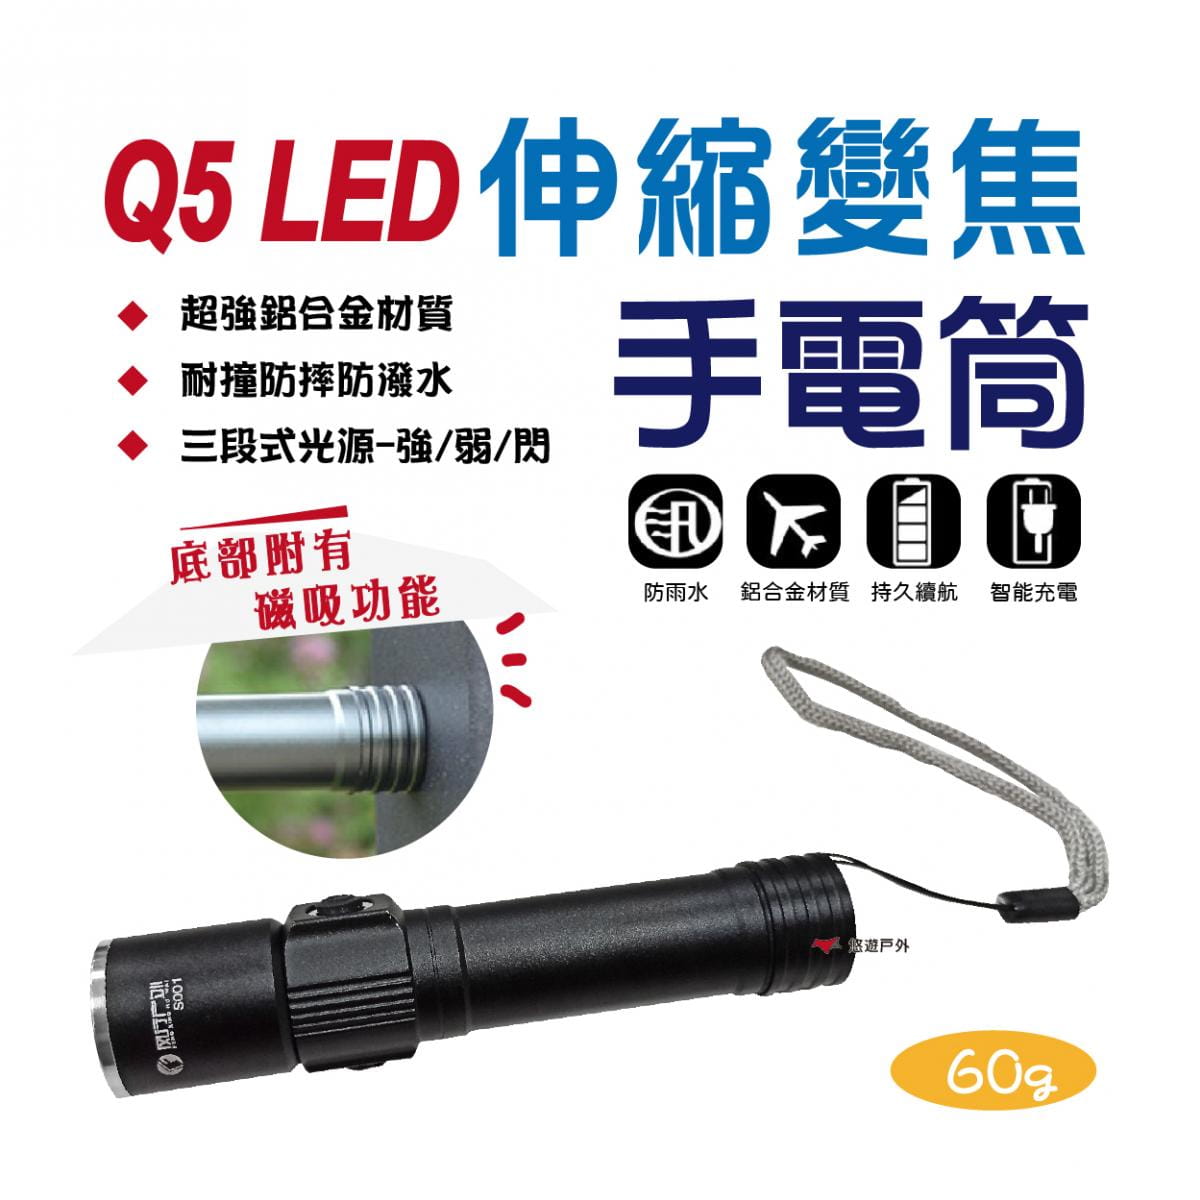 Q5 LED變焦 強光手電筒 (悠遊戶外) 0